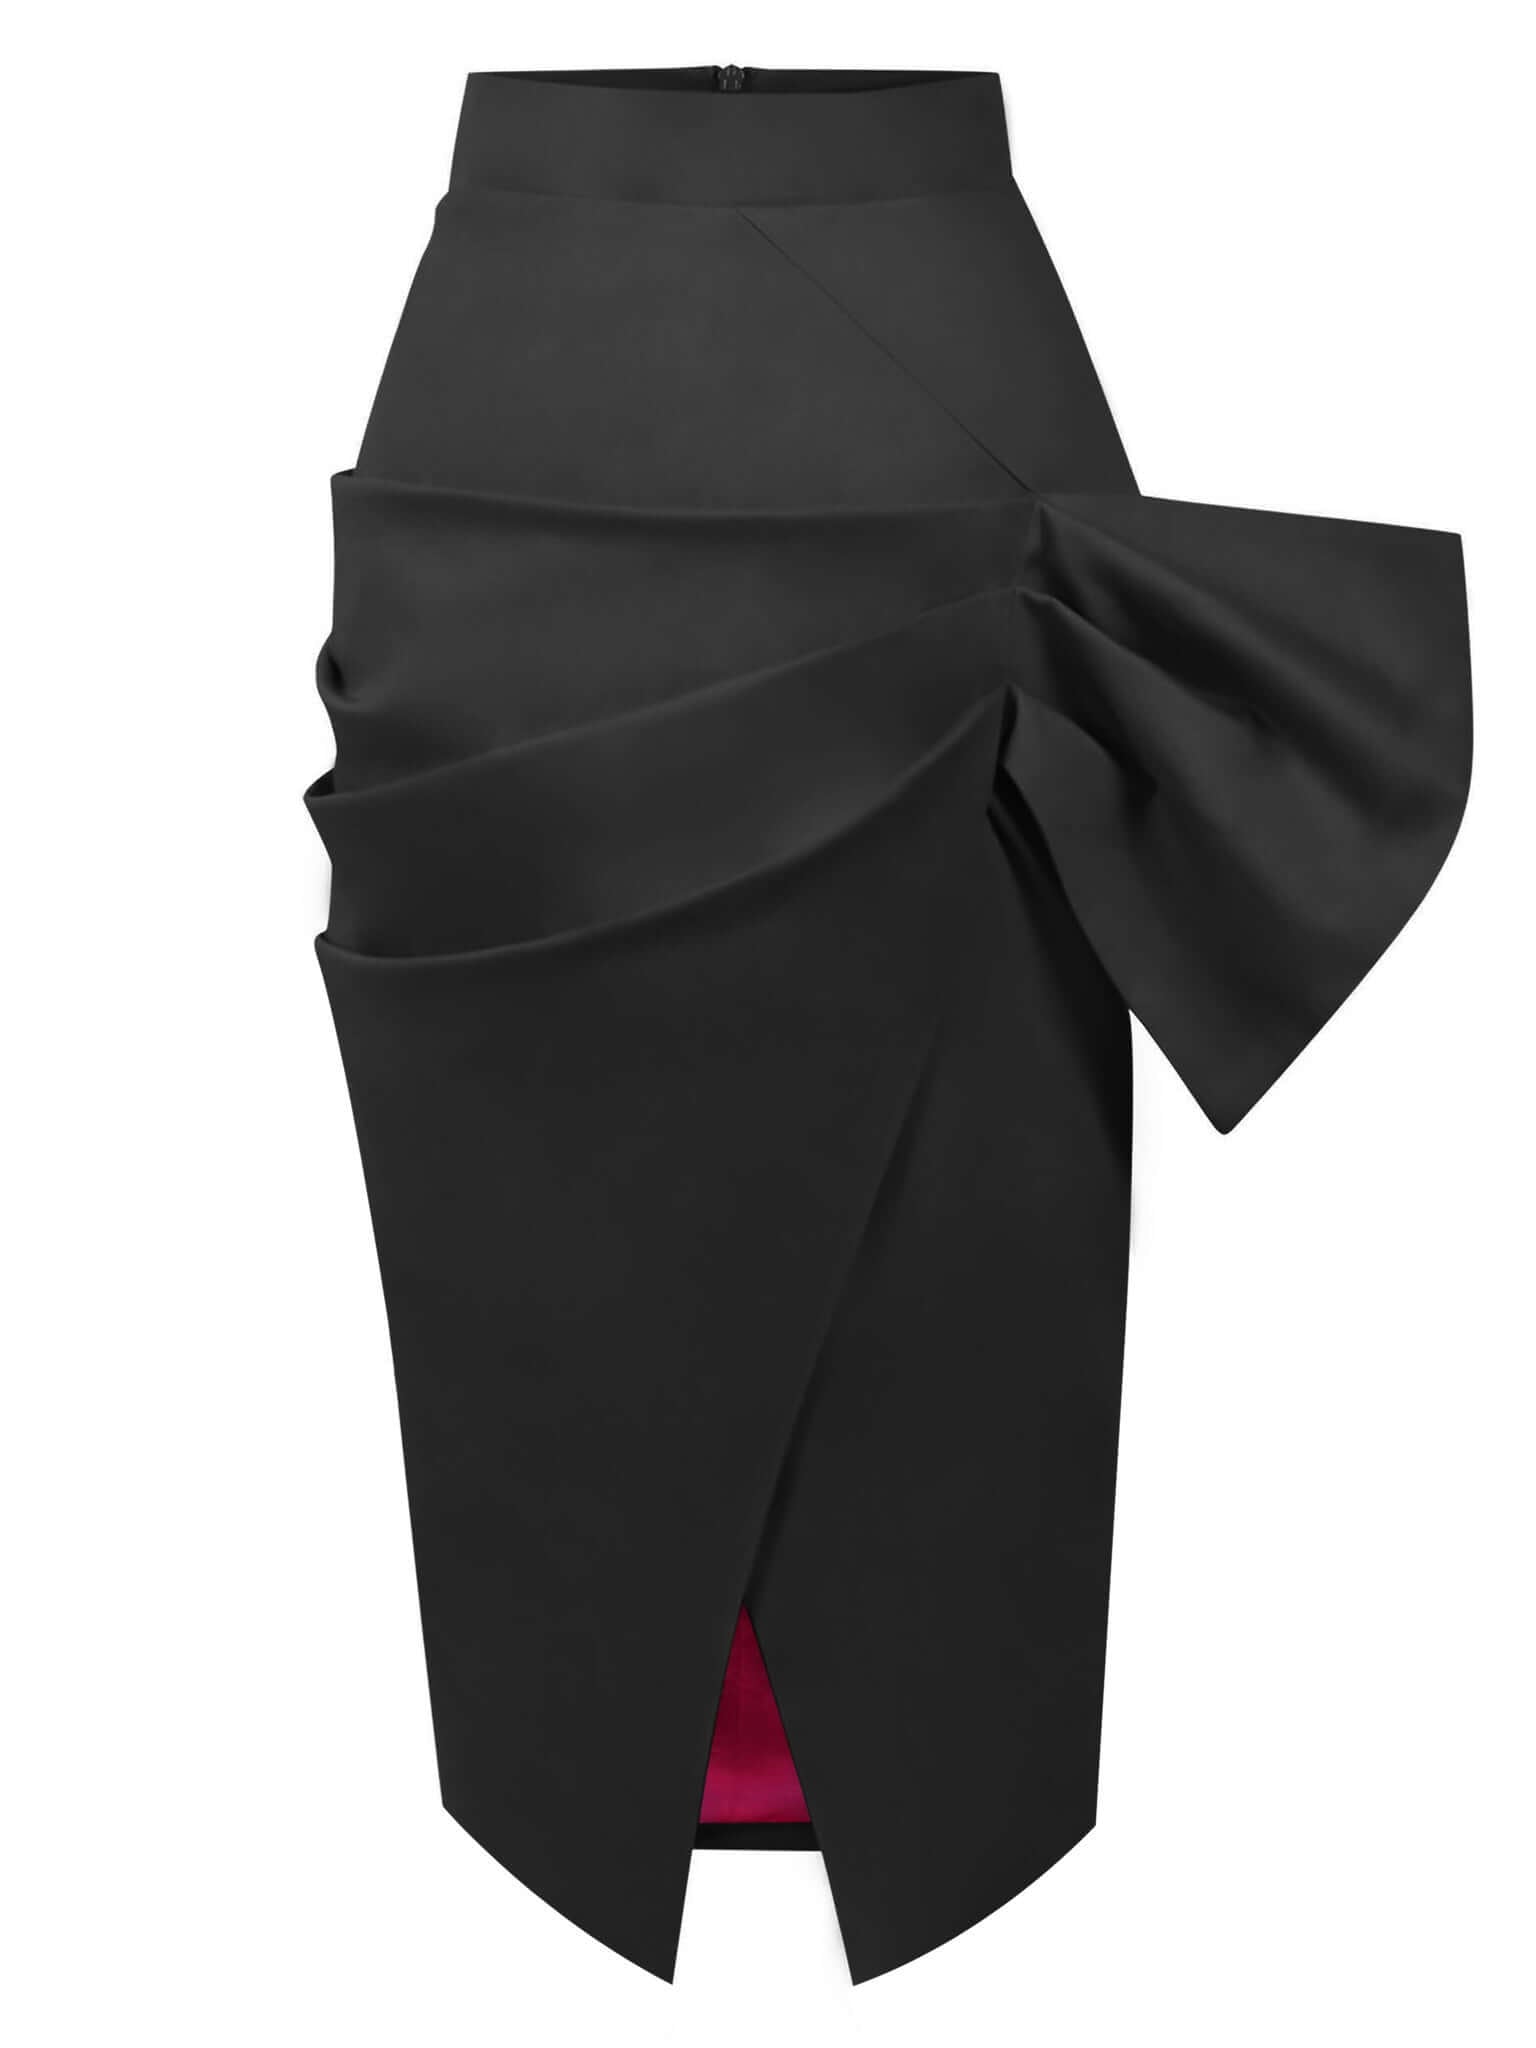 Glam Leisure Bodycon Midi Skirt - Black by Tia Dorraine Women's Luxury Fashion Designer Clothing Brand